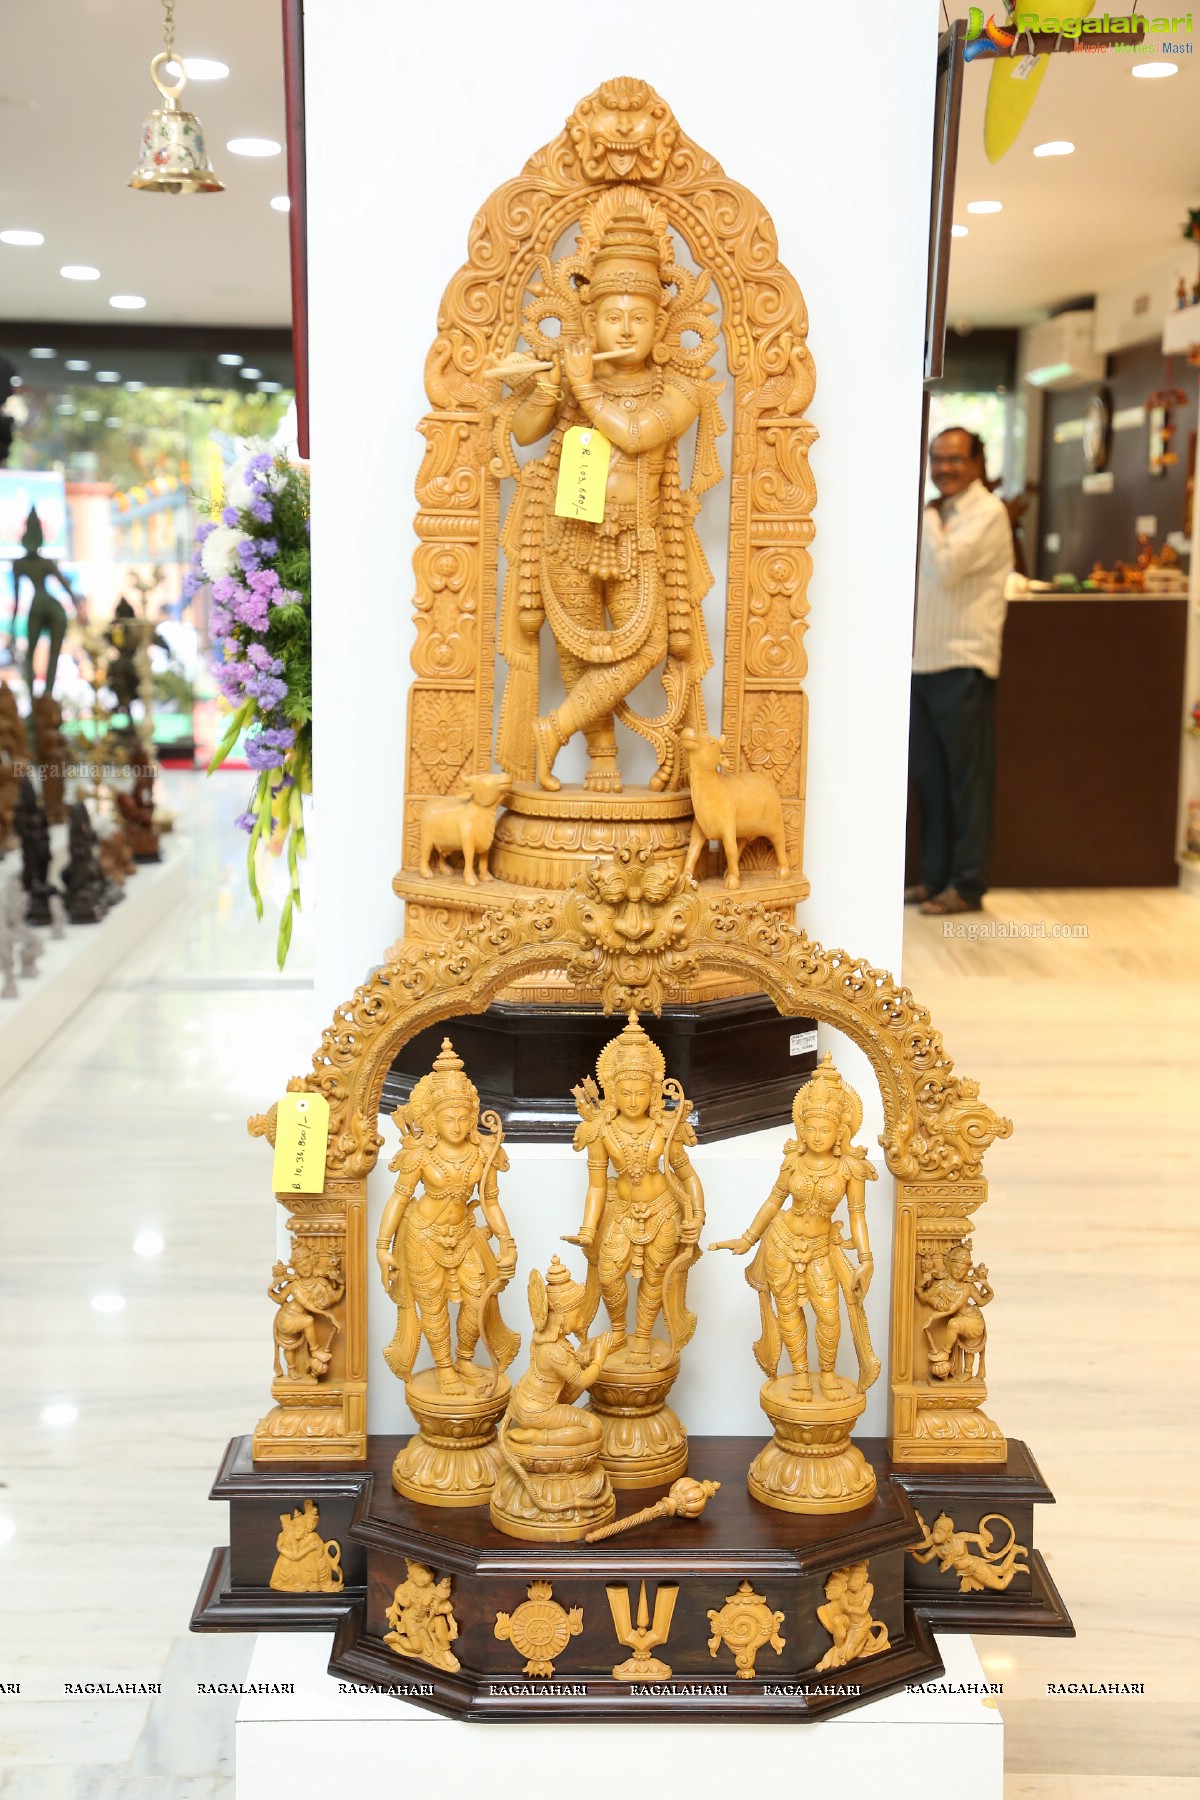 Lepakshi Handicrafts Emporium Begins at Nandagirihills, Hyderabad